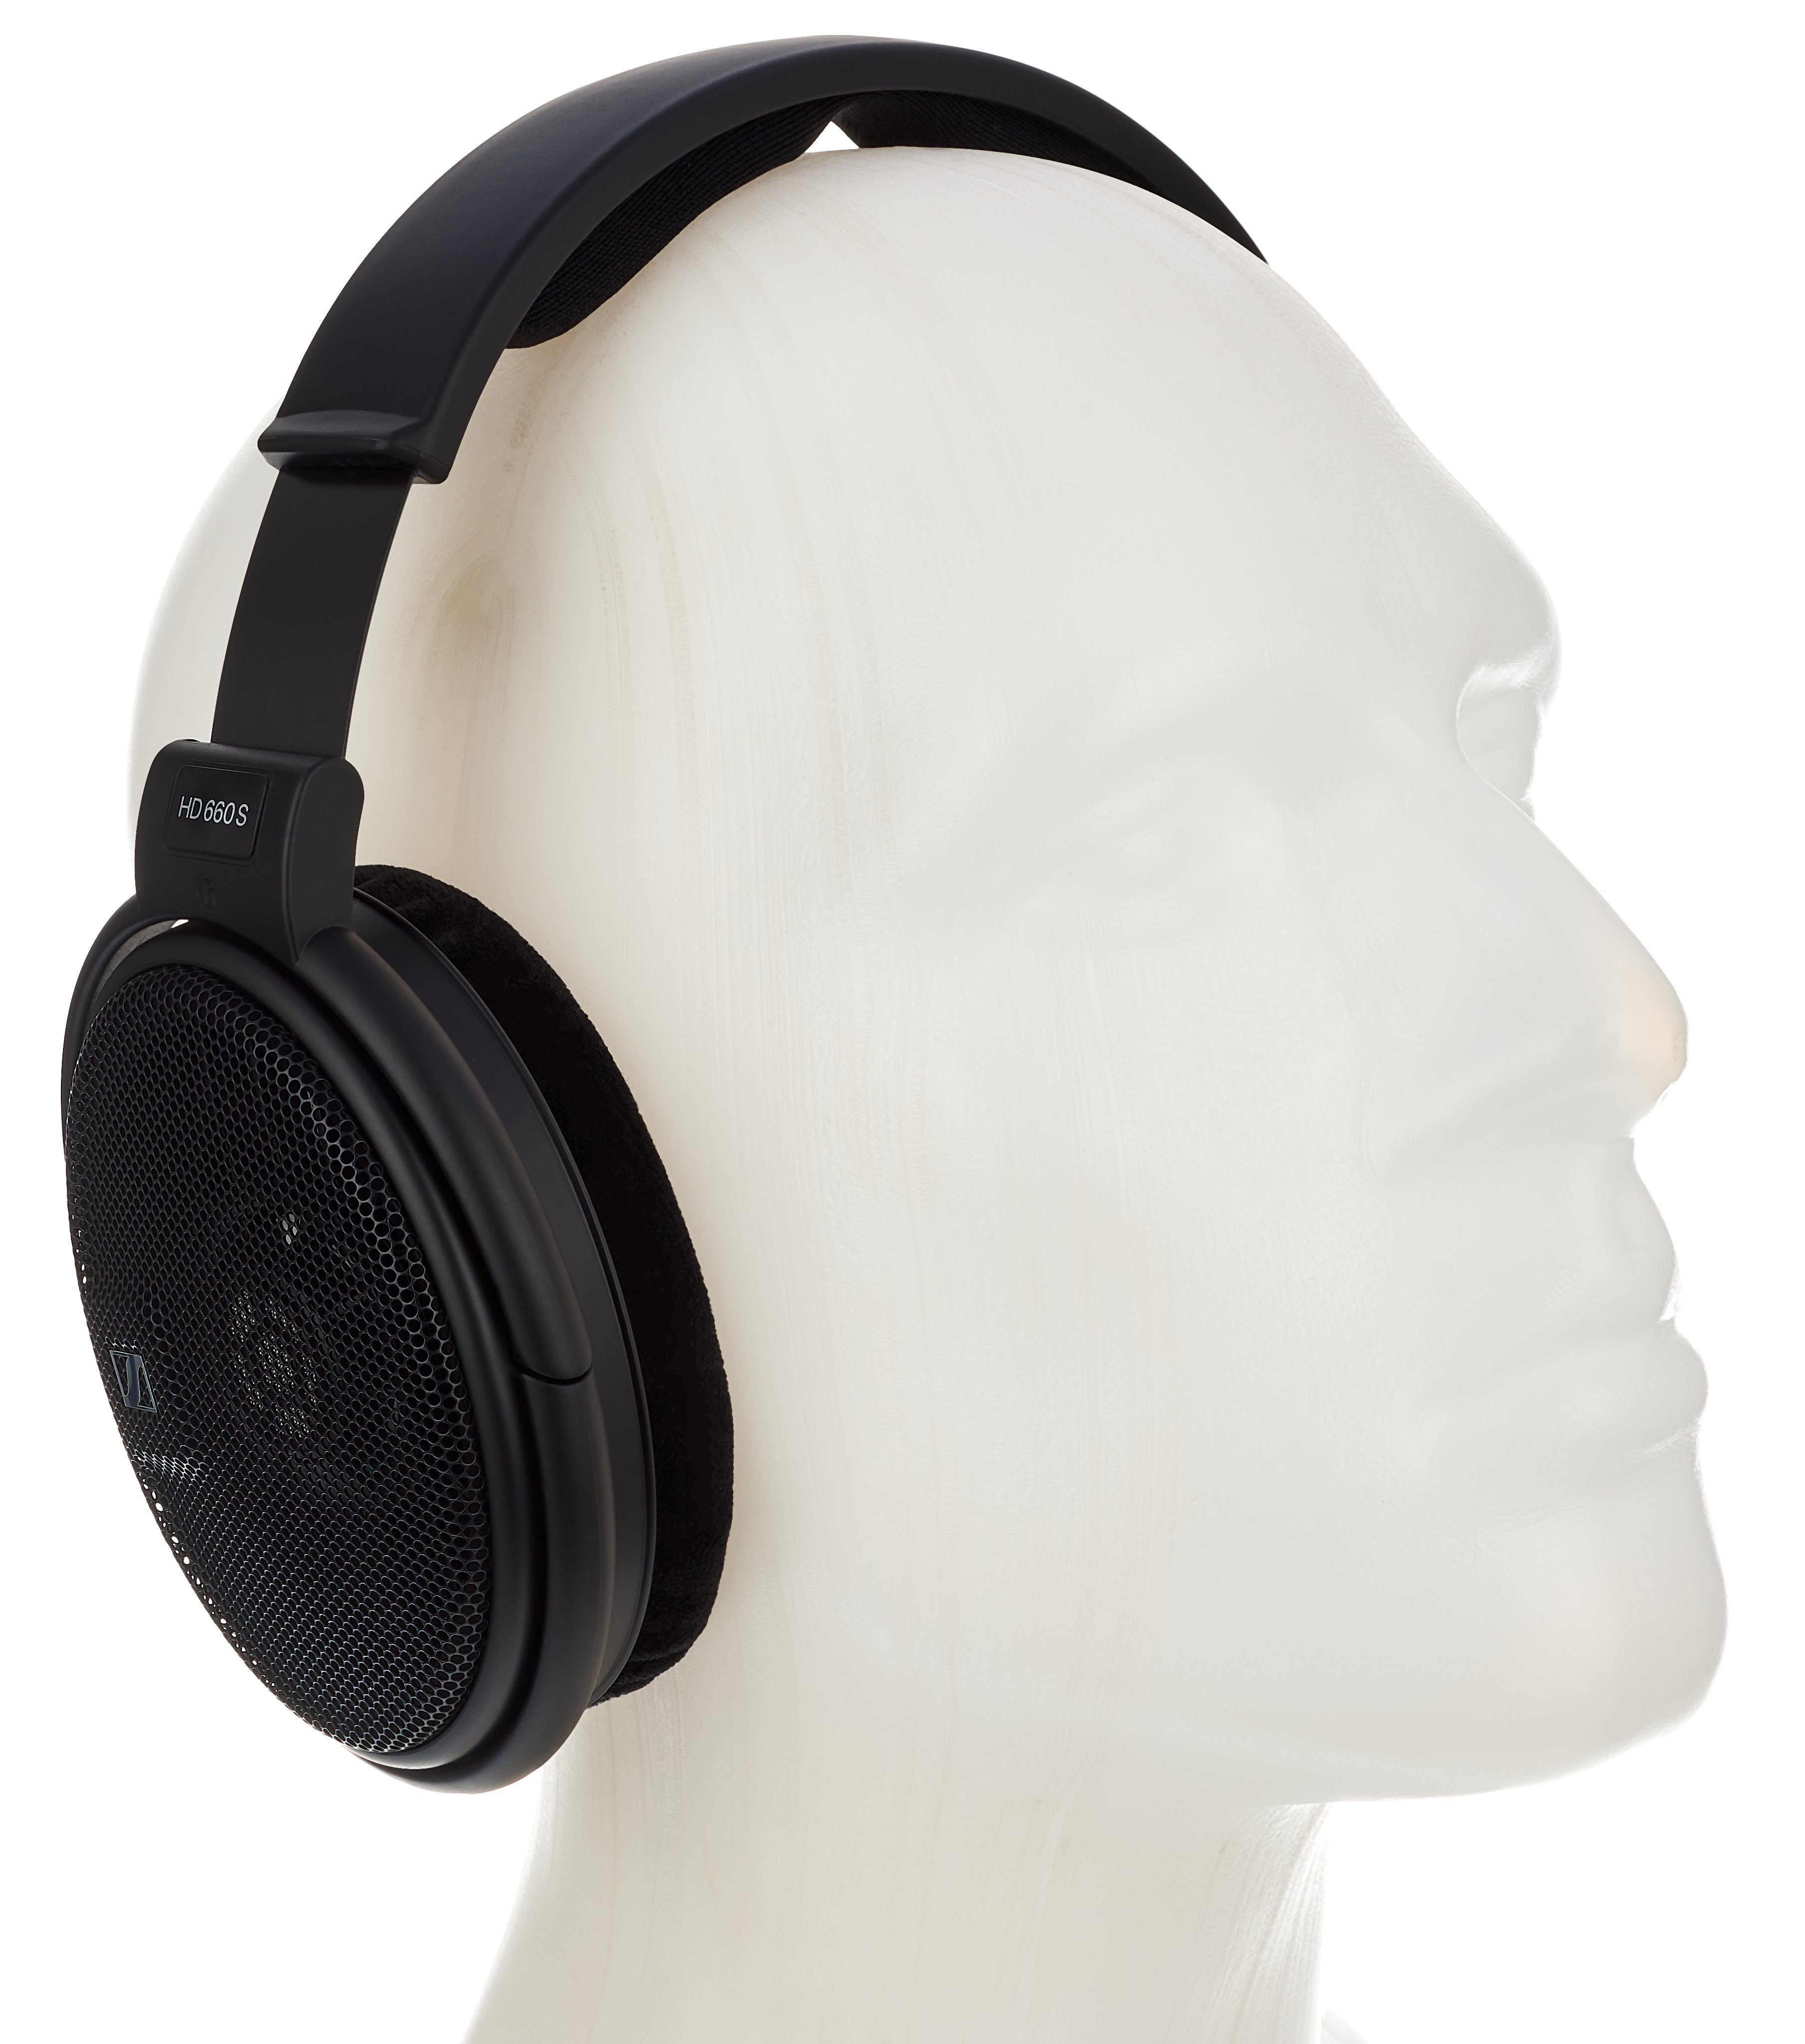 Sennheiser HD 660S Review: Audiophile Headphones for $499